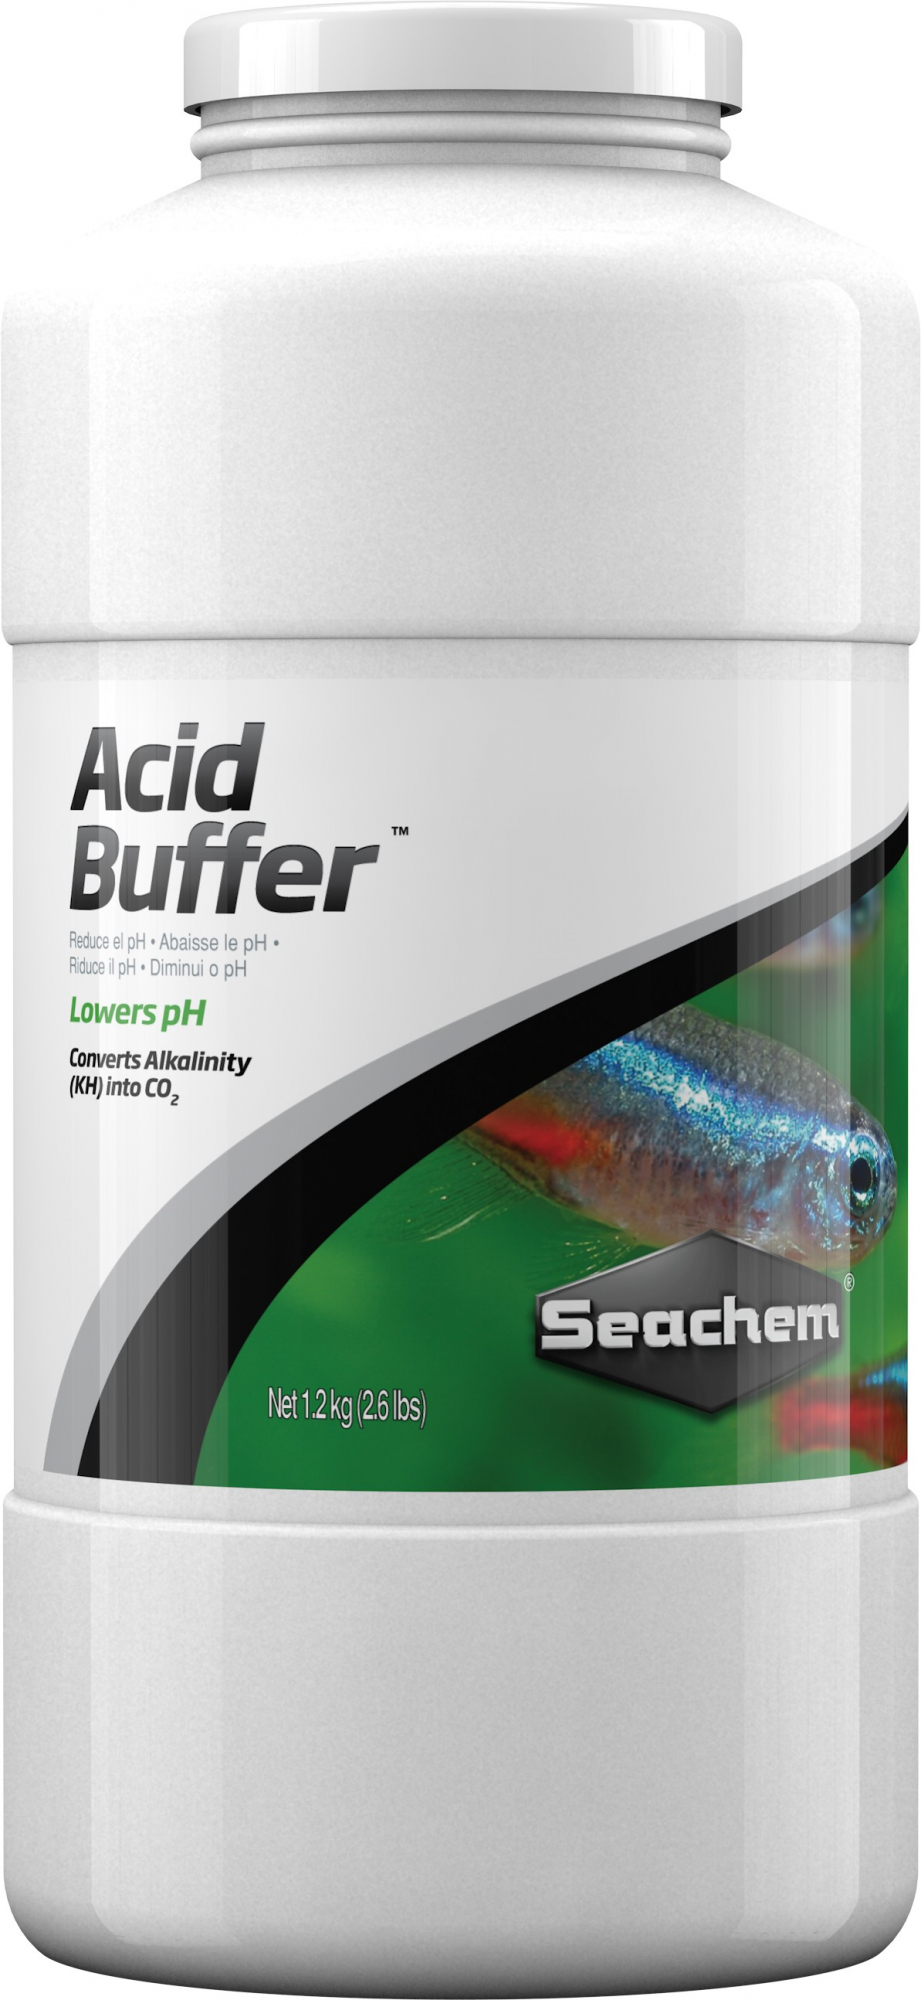 Acid Buffer - SEACHEM vermindering van de PH